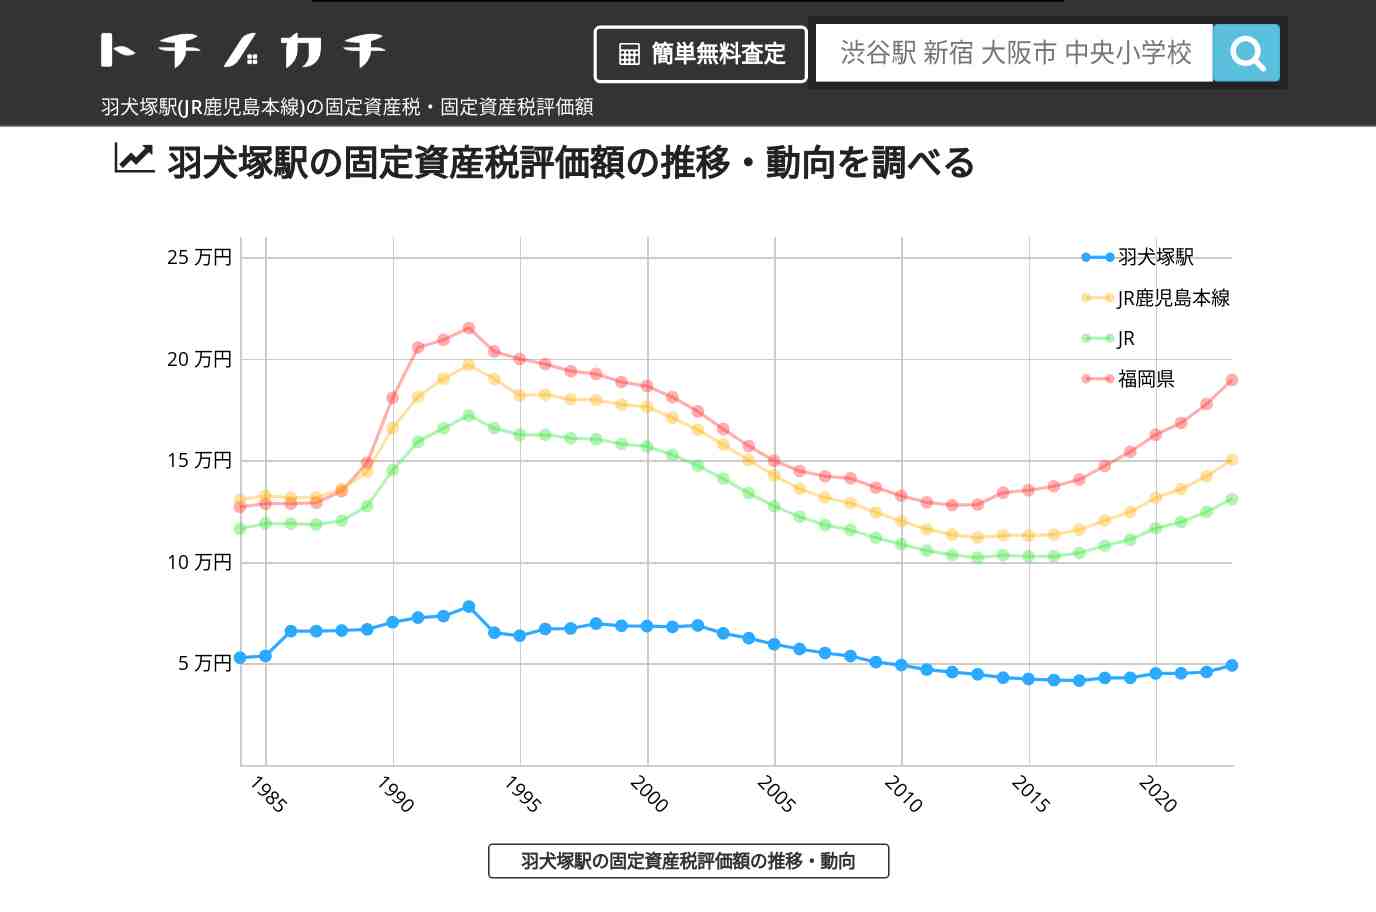 羽犬塚駅(JR鹿児島本線)の固定資産税・固定資産税評価額 | トチノカチ